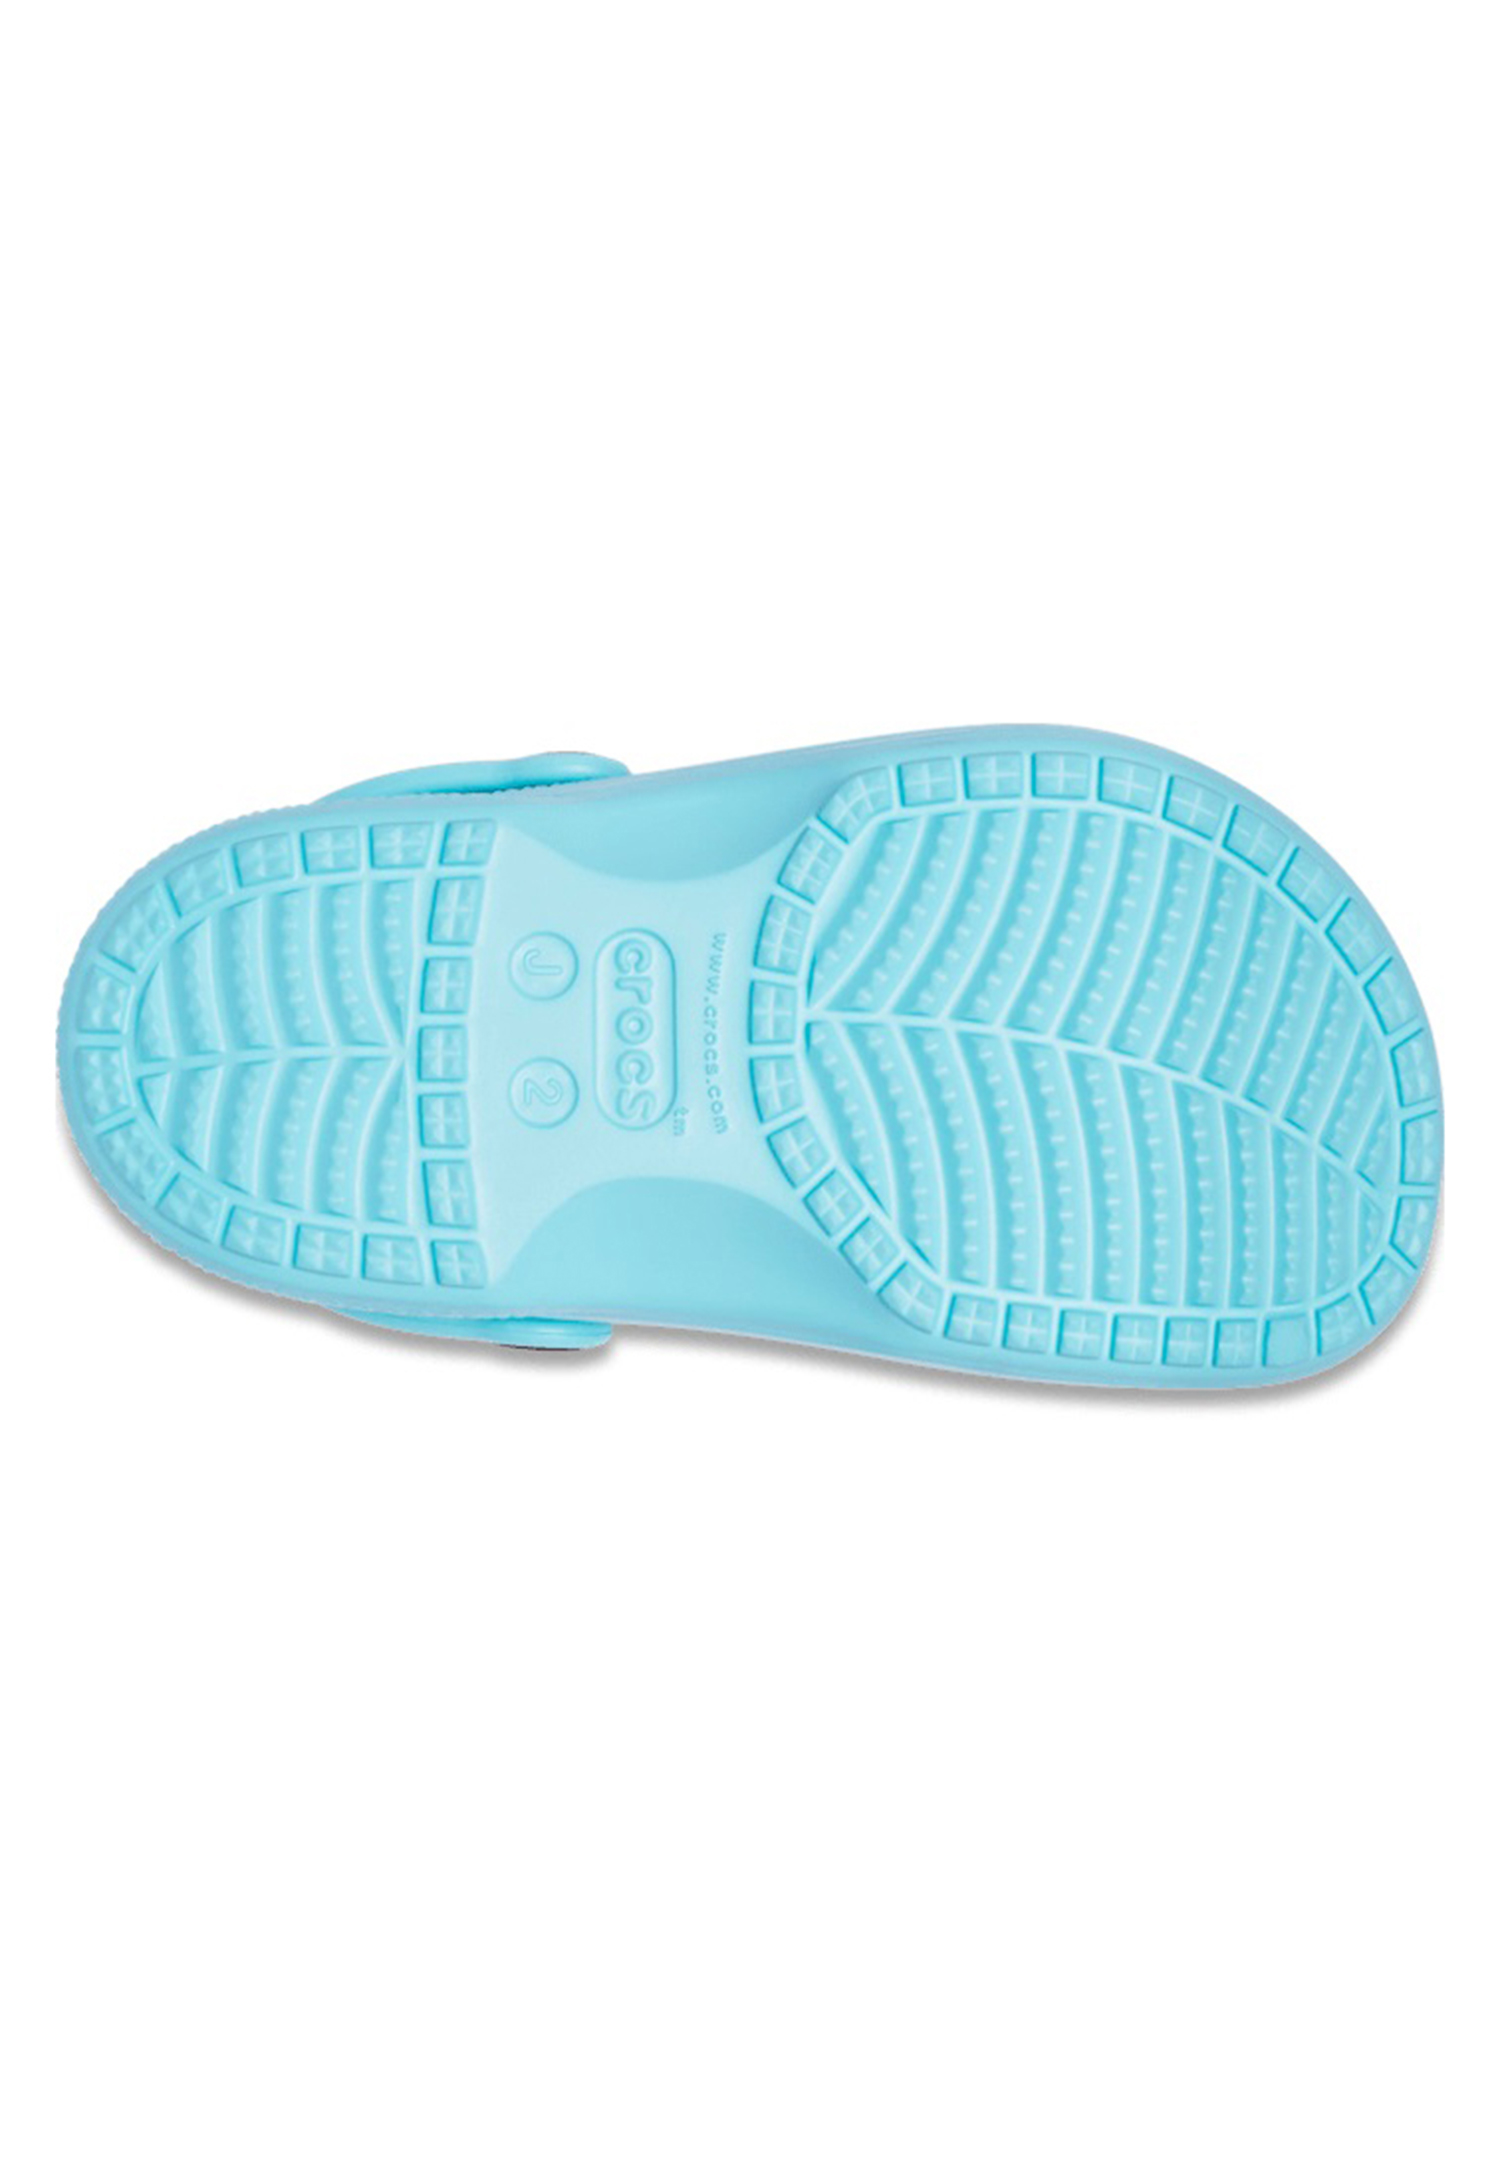 Crocs Kids Fun Lab Disney Frozen II Clog K Sandale Schuhe 207465 blau